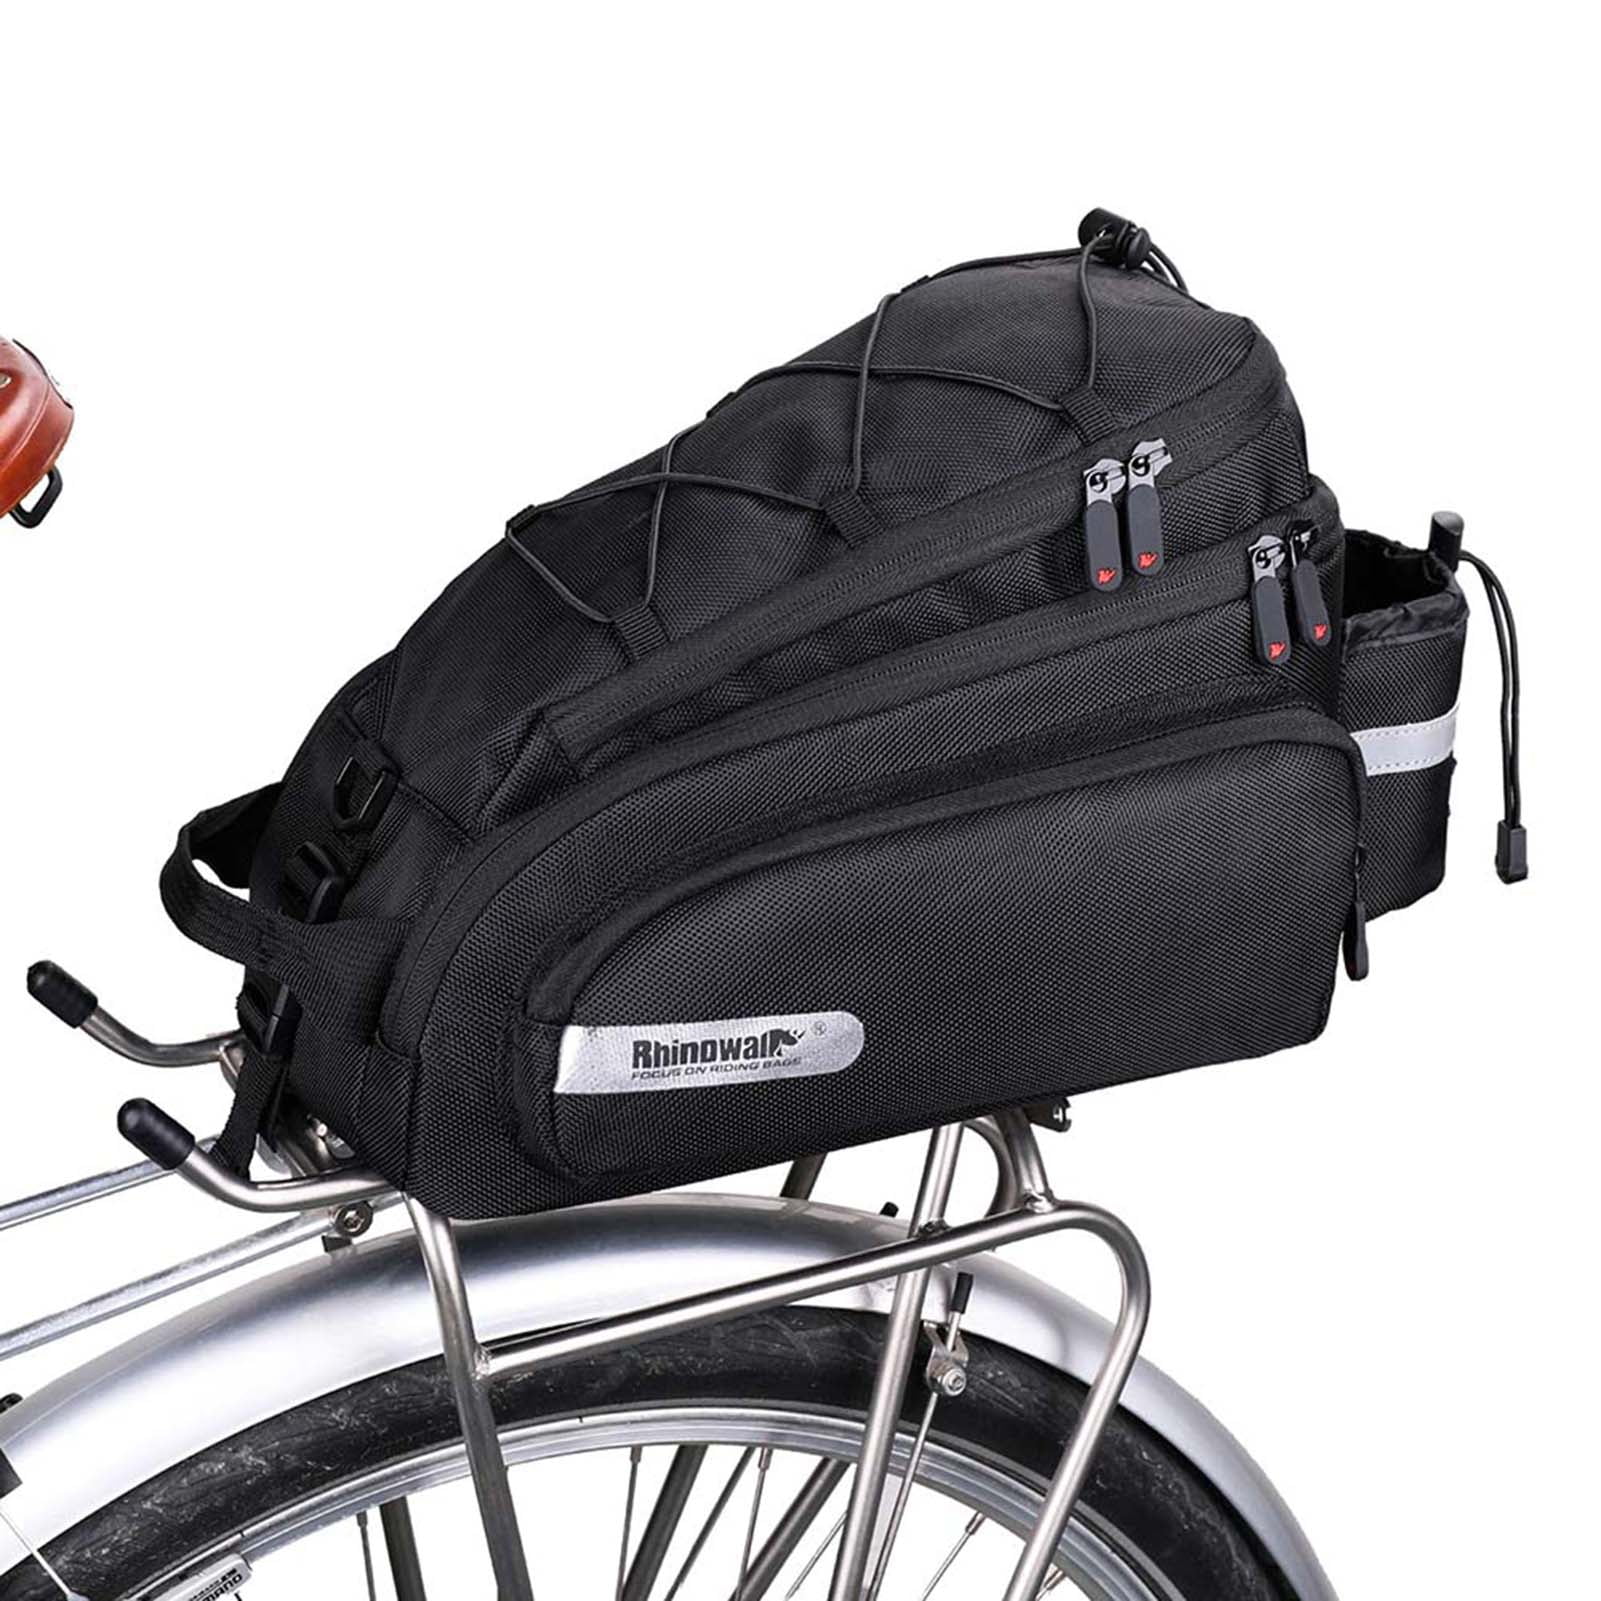 Details about   20L Bike Saddle Rack Trunk Bag Luggage Carrier Pannier bag w/ Rain Cover WA Z8Z6 